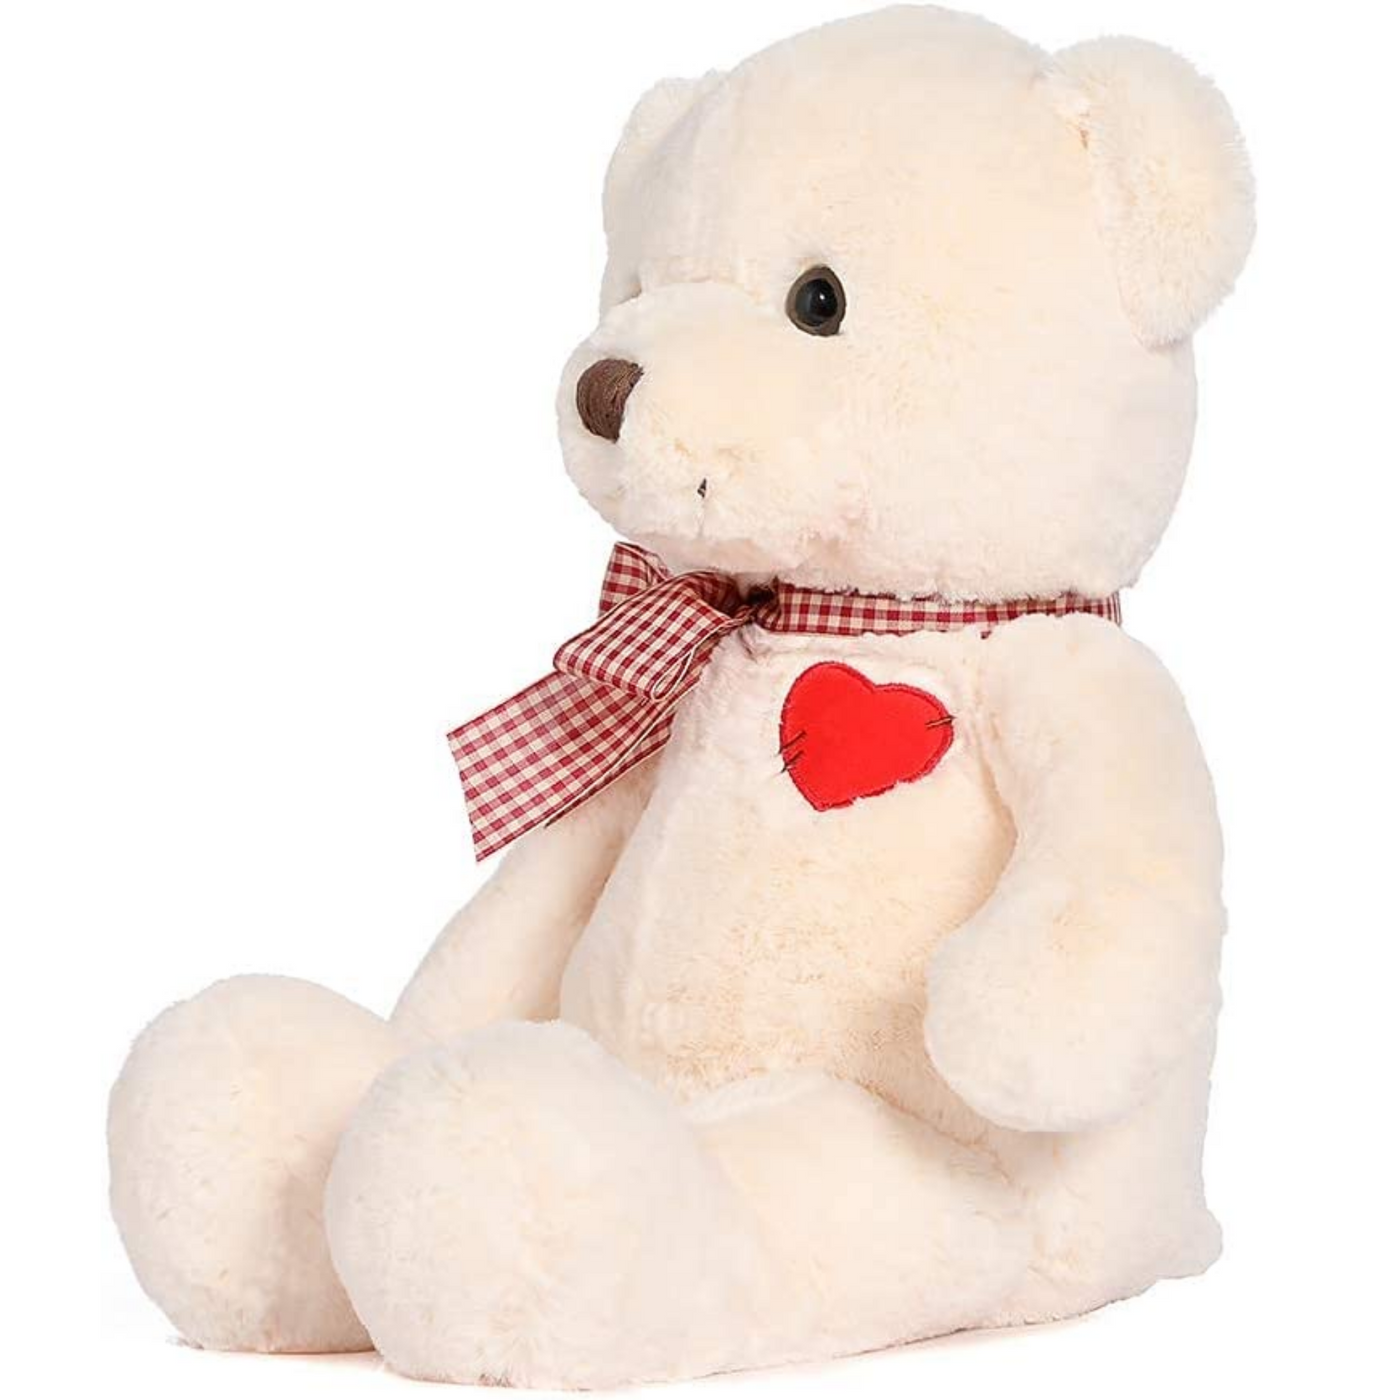 Teddy Bear Stuffed Animal Toy, Beige, 20 Inches - MorisMos Plush Toys